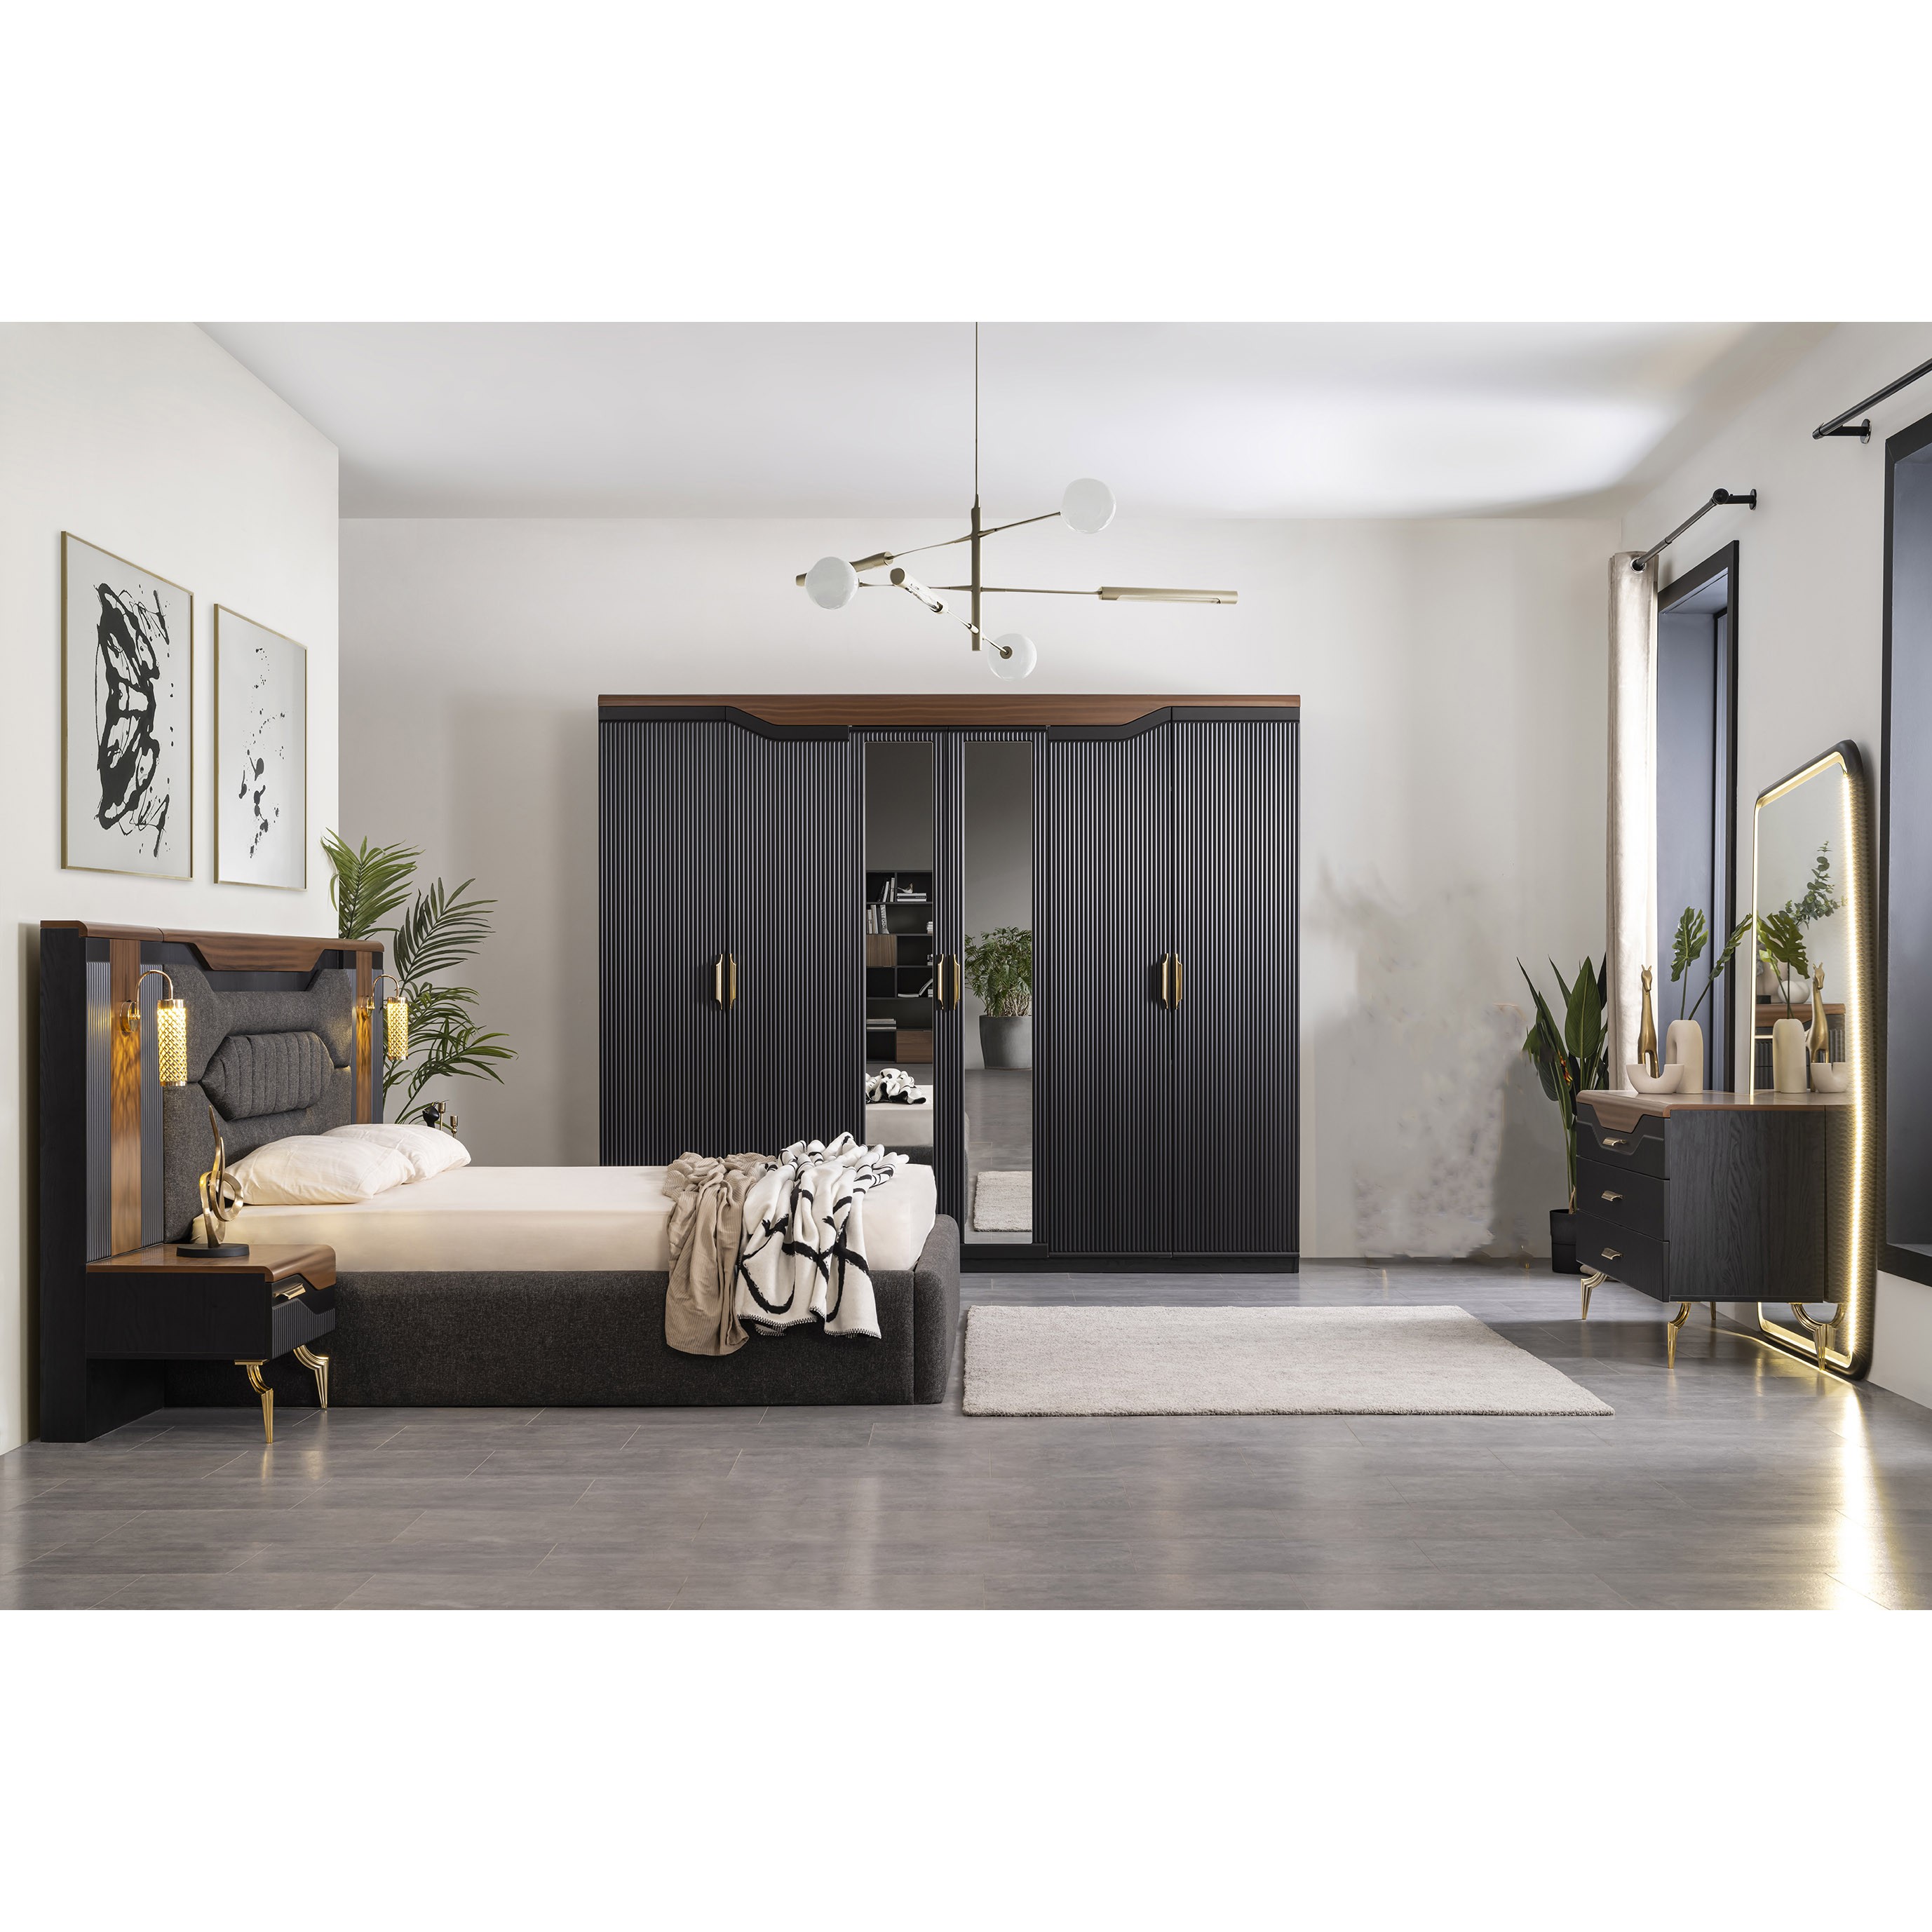 Style Hermes Vol2 Bedroom (Bed With Storage 160x200cm)